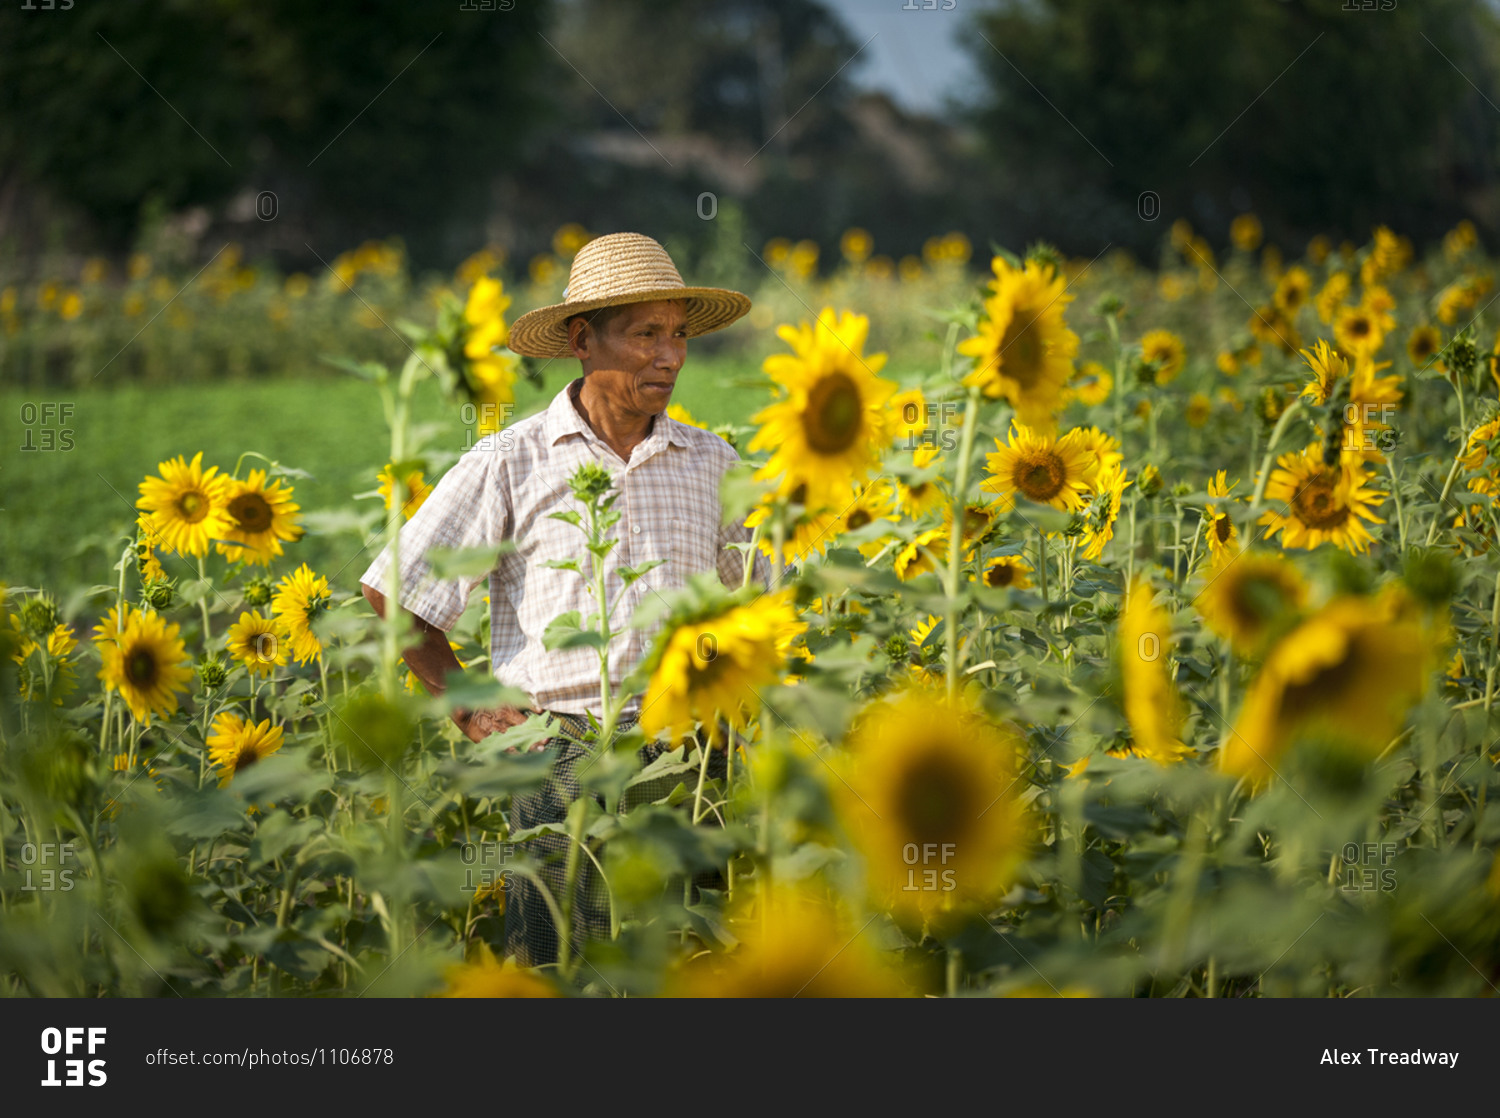 A man working in a sunflower field near Myitkyina in Kachin State